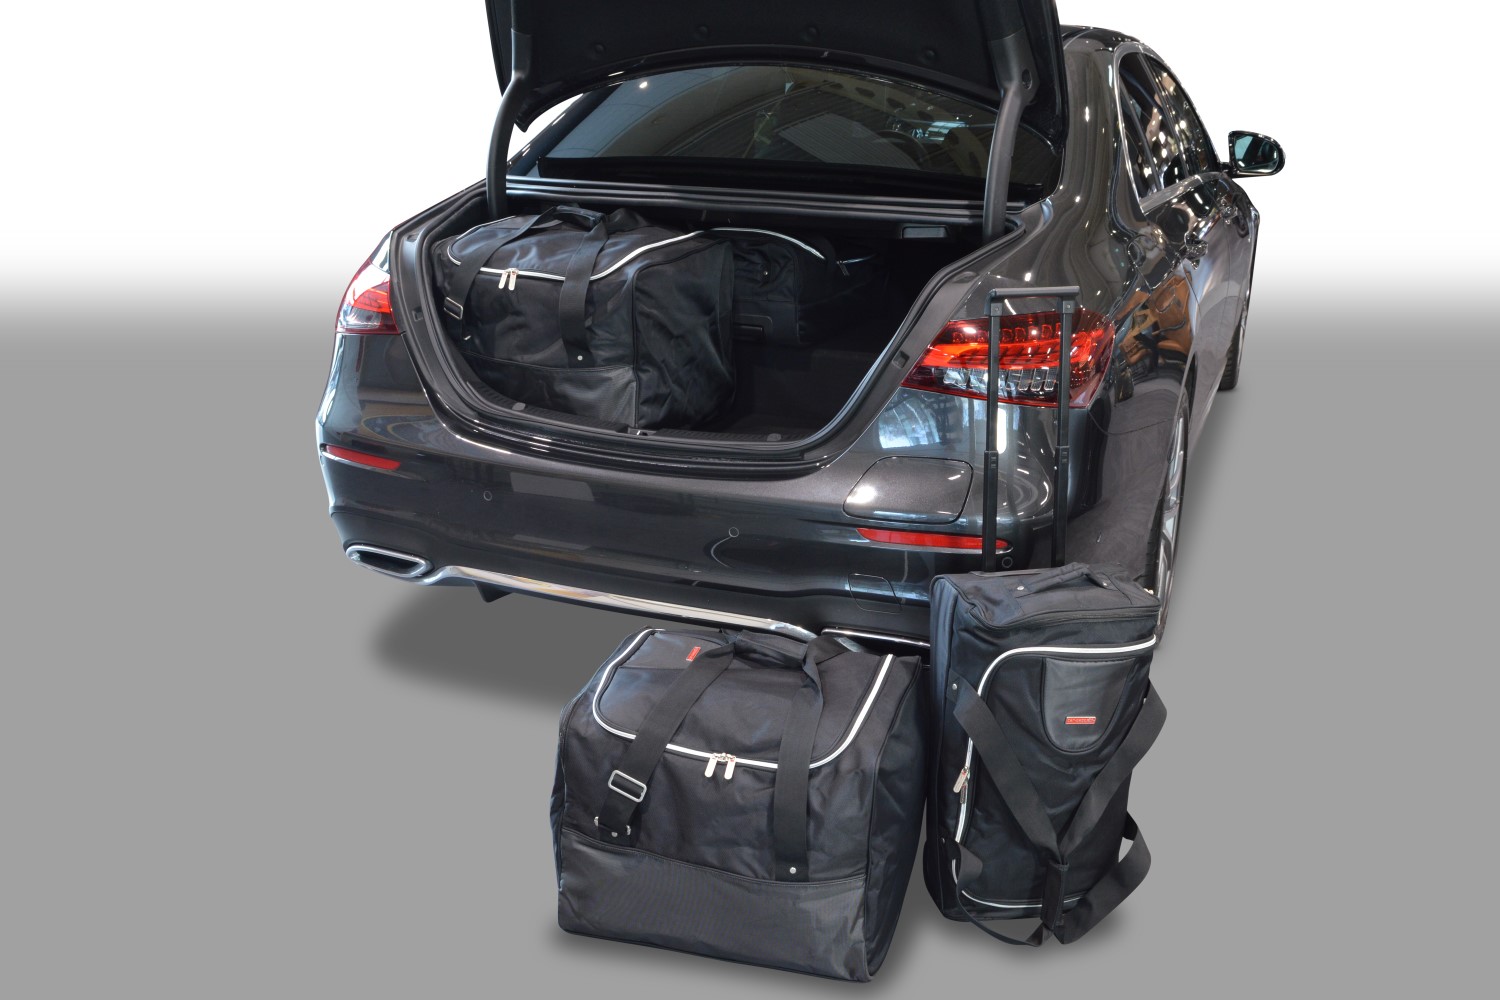 Mercedes Benz Travel Duffle Bags